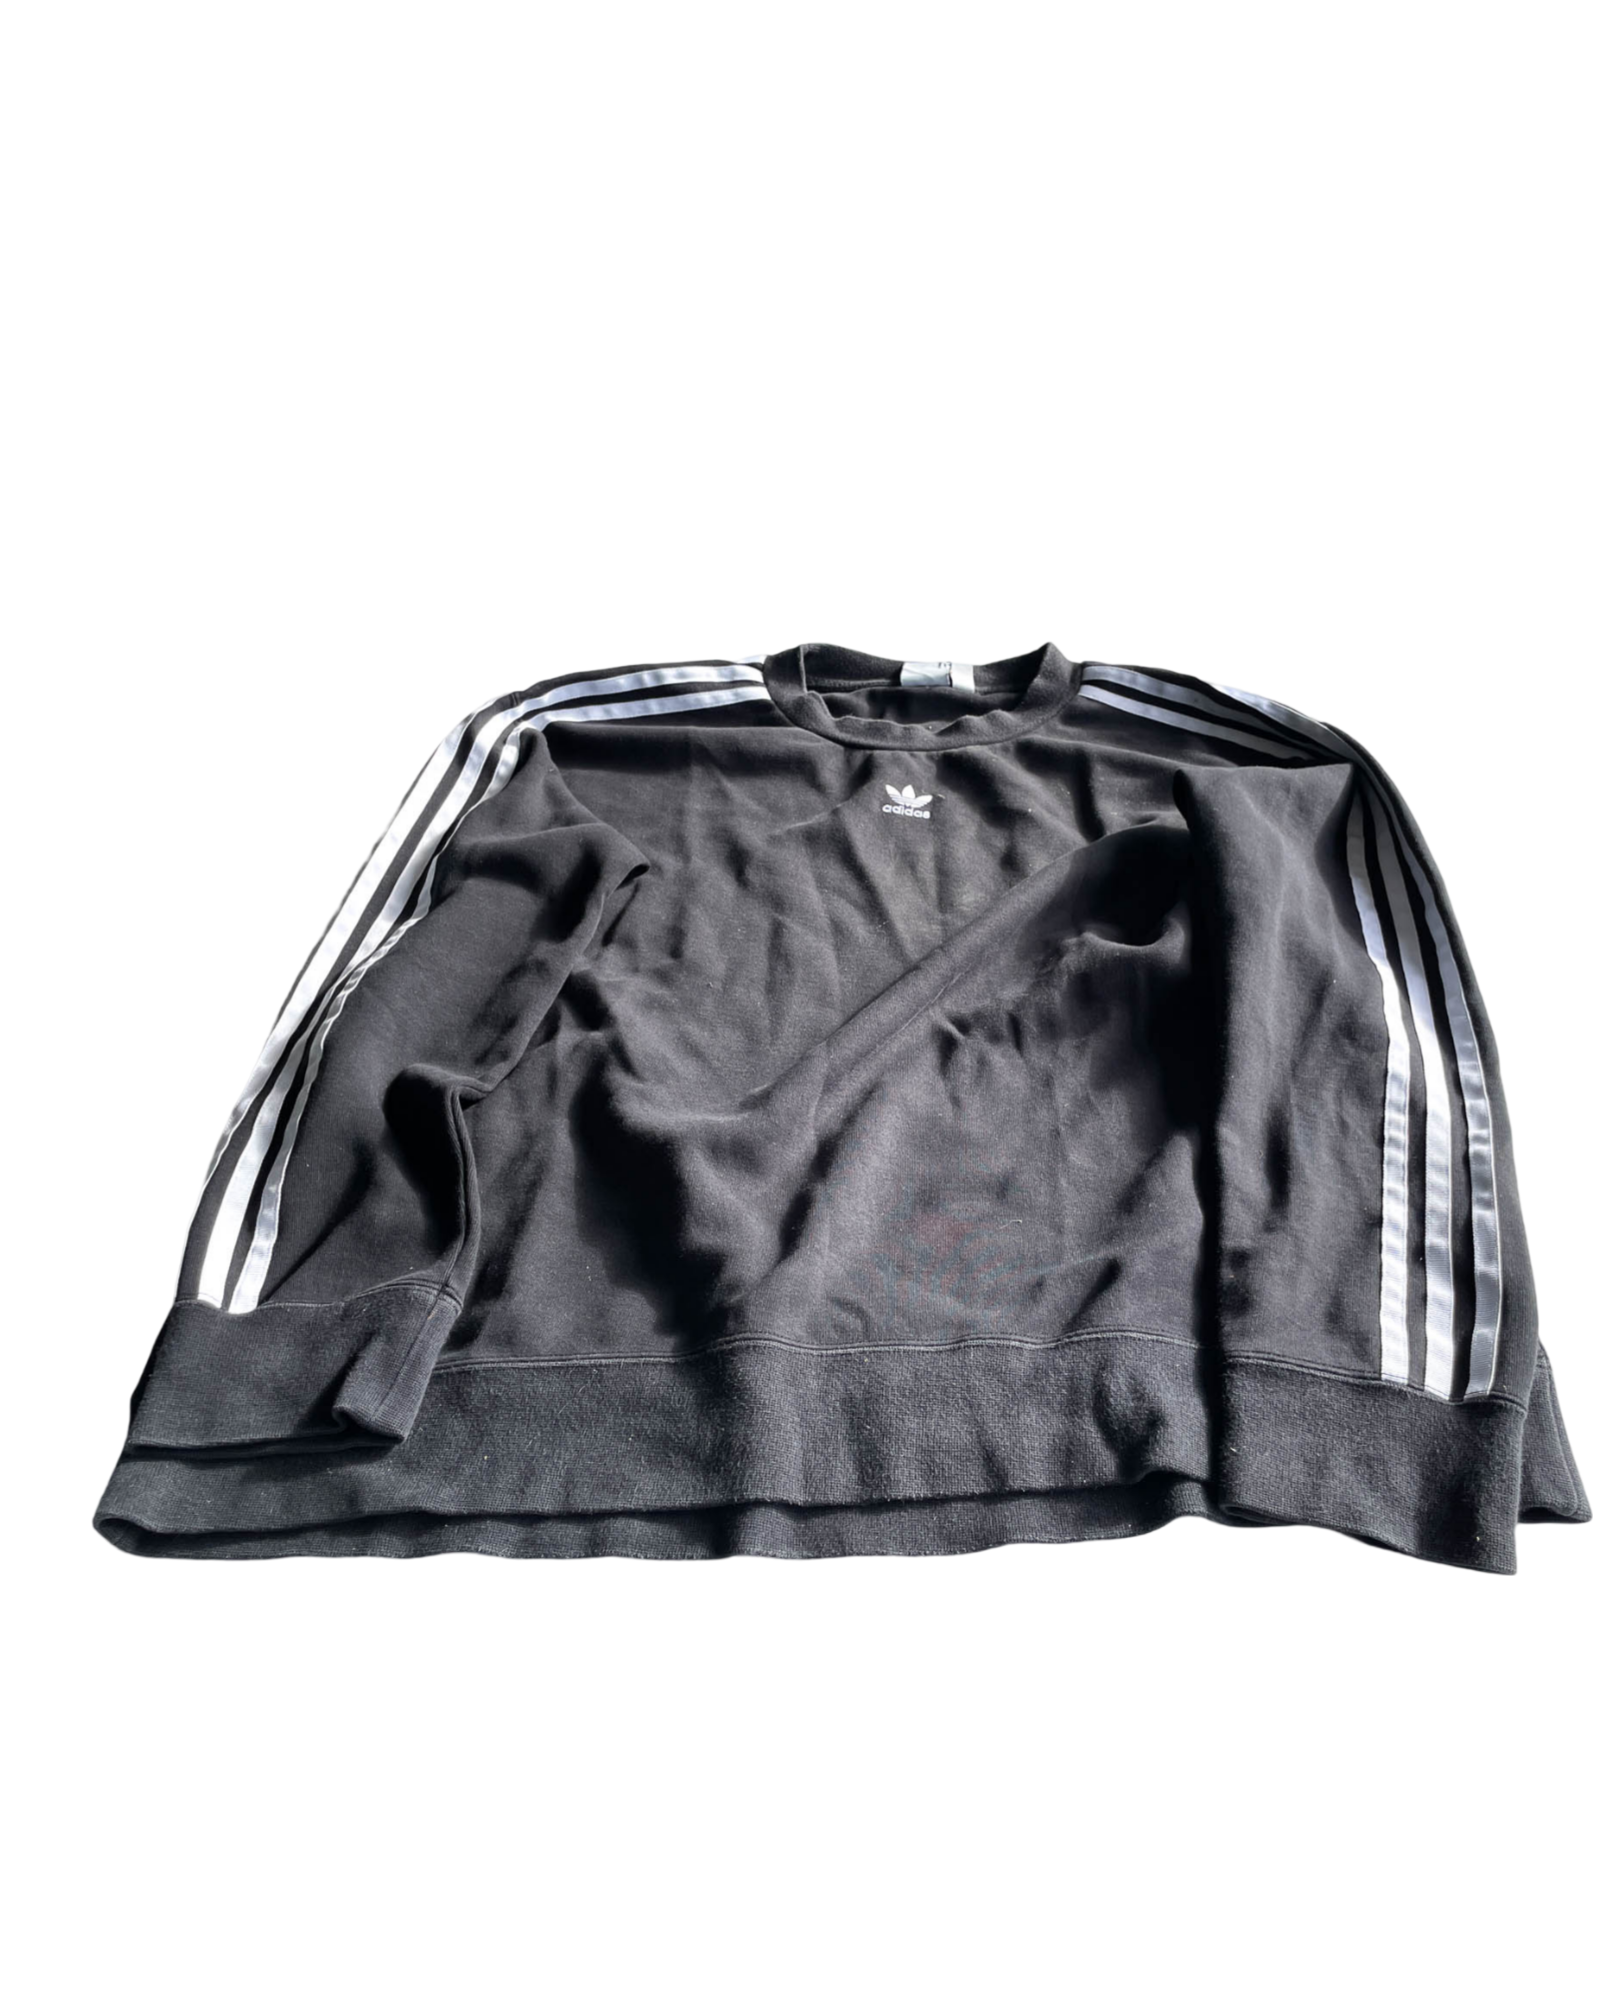 VTG Adidas Women's Black and White Sweatshirt  IN UK 12  L 25 W 21 |SKU 5060